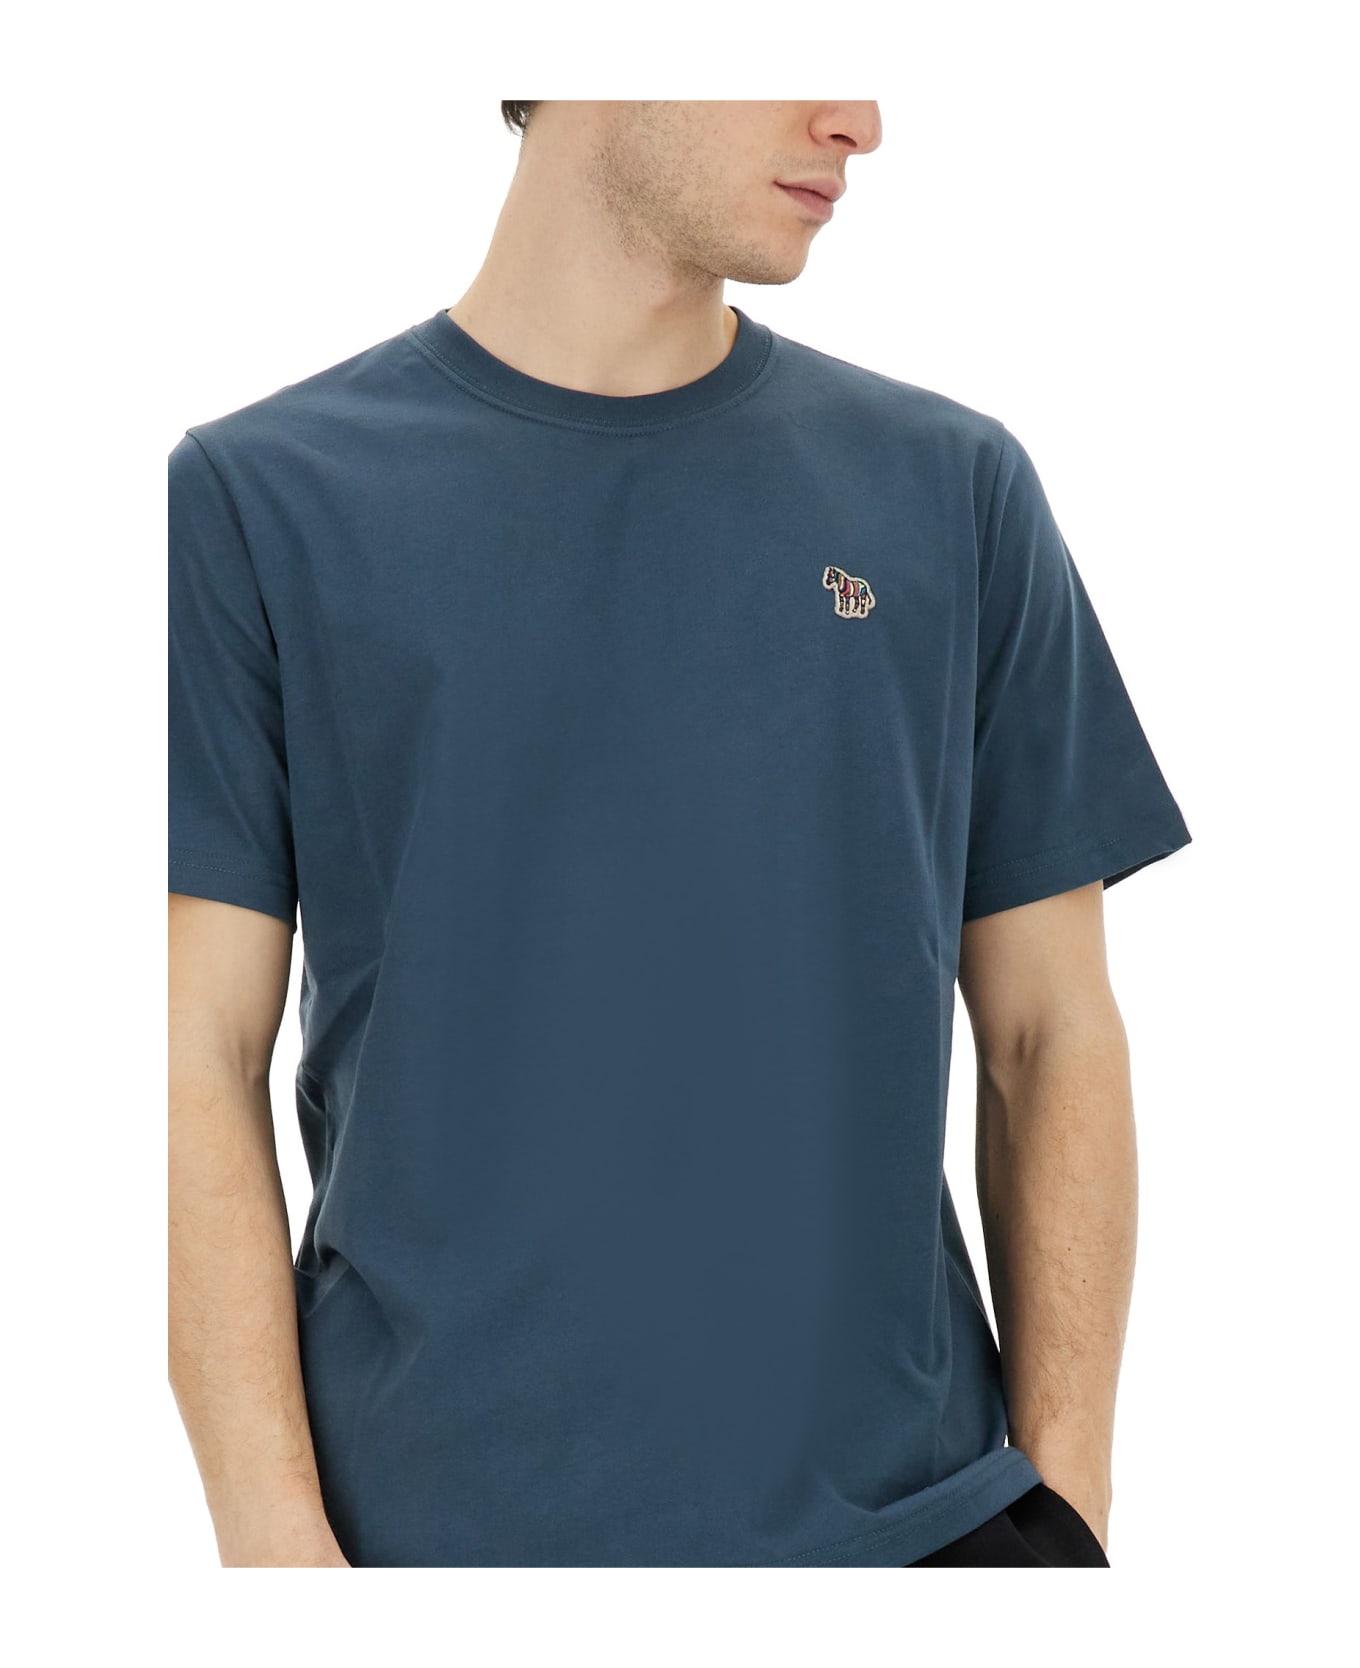 Paul Smith Zebra T-shirt - Blue